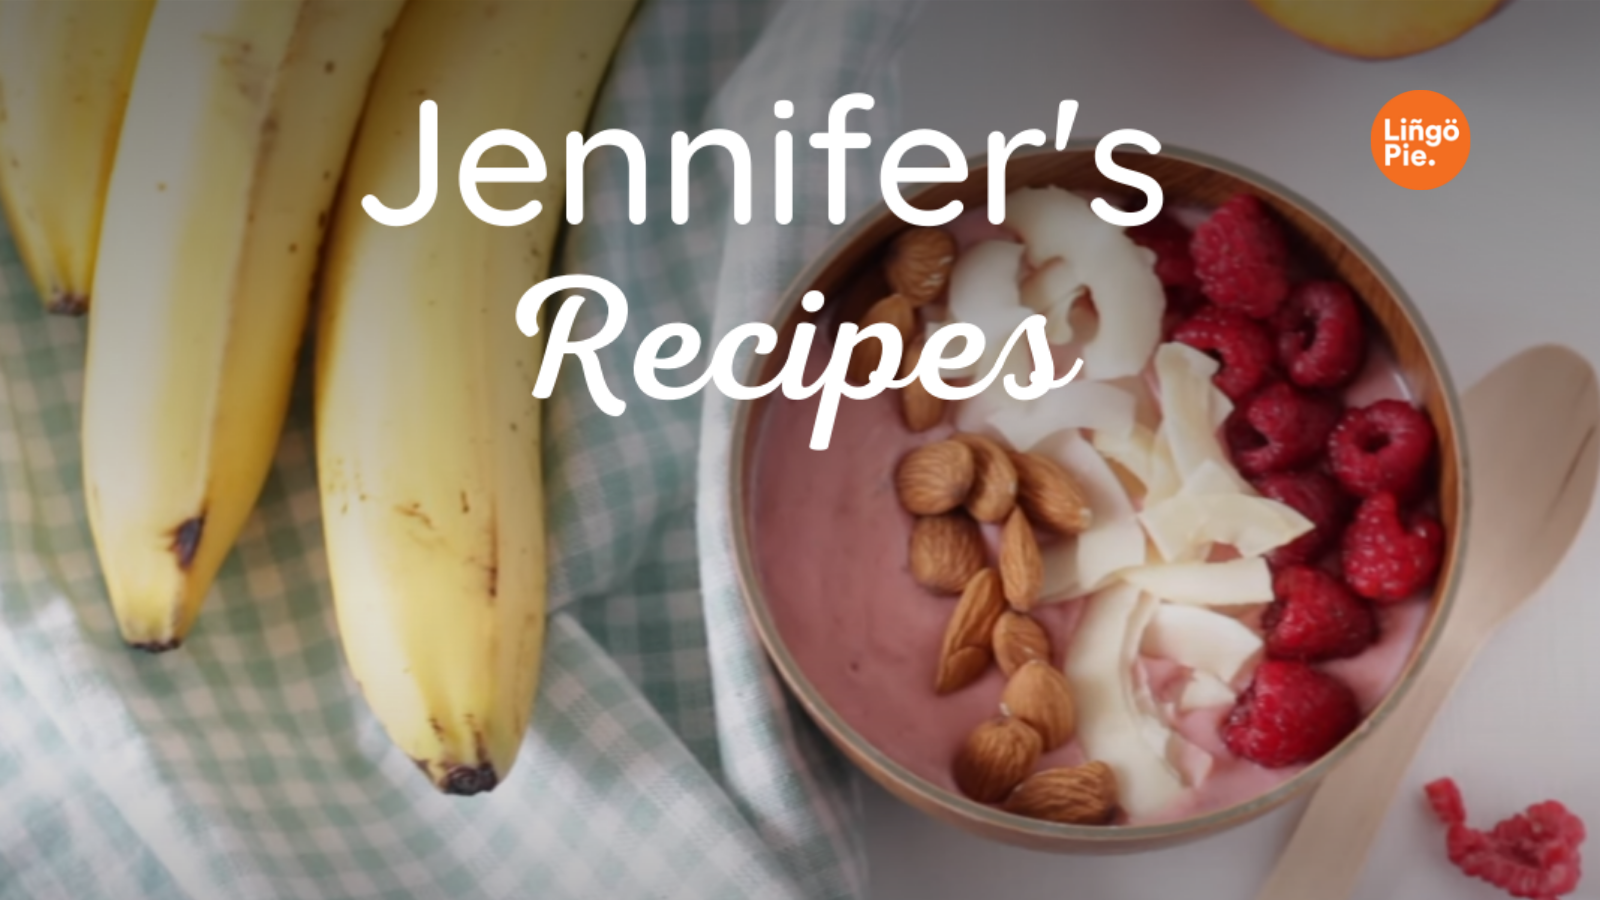 Jennifer's Recipes on Lingopie.